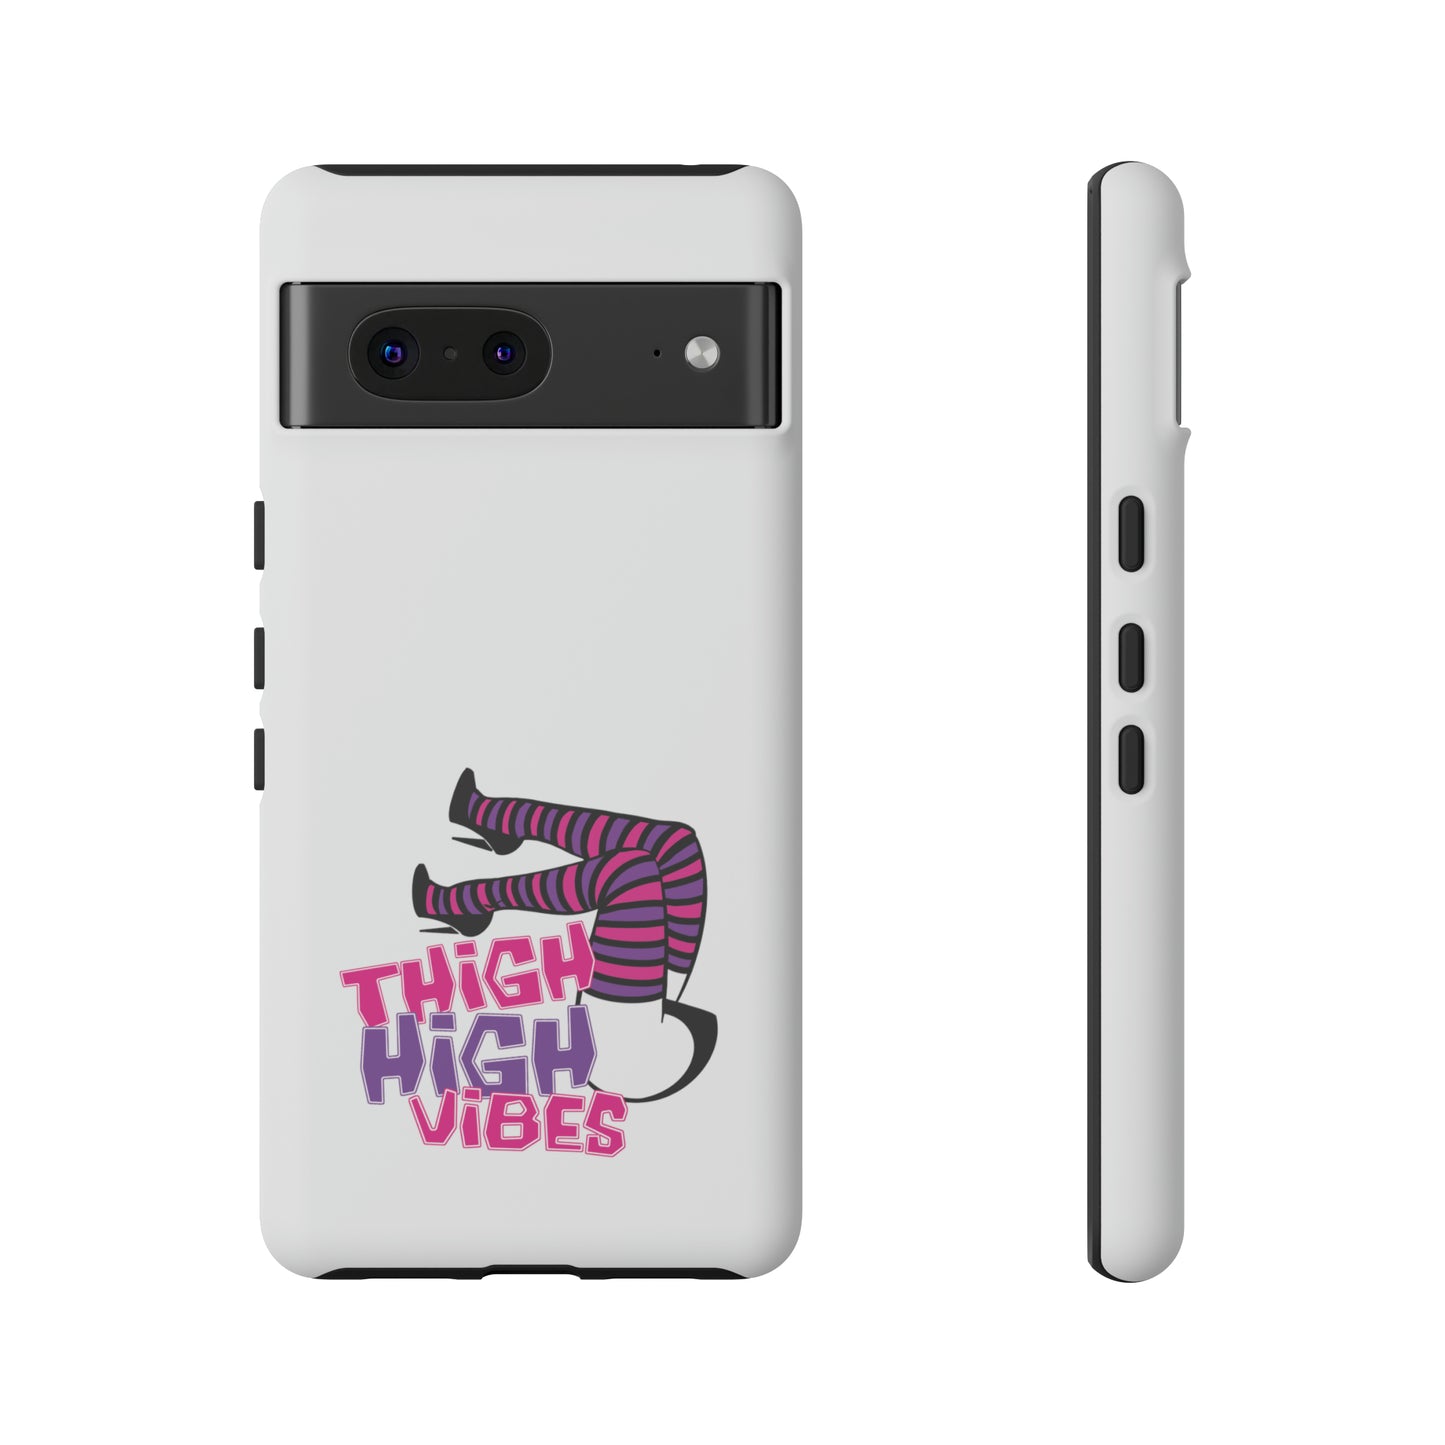 Thigh High Vibes Phone Case